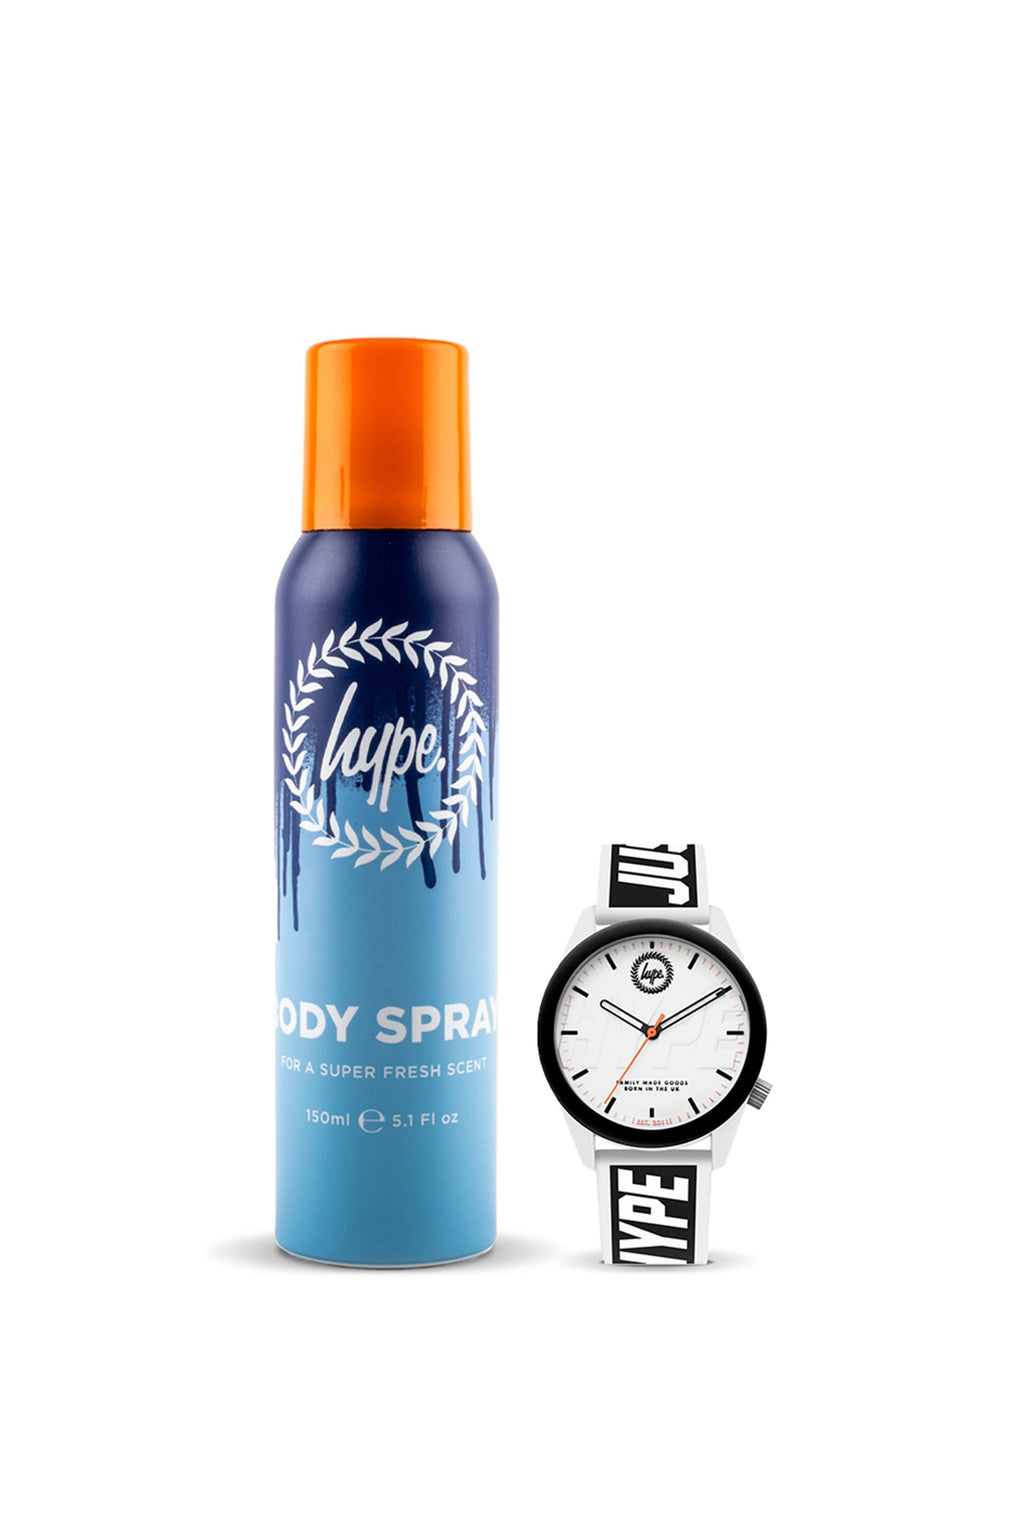 Hype Watch & Body Spray Set